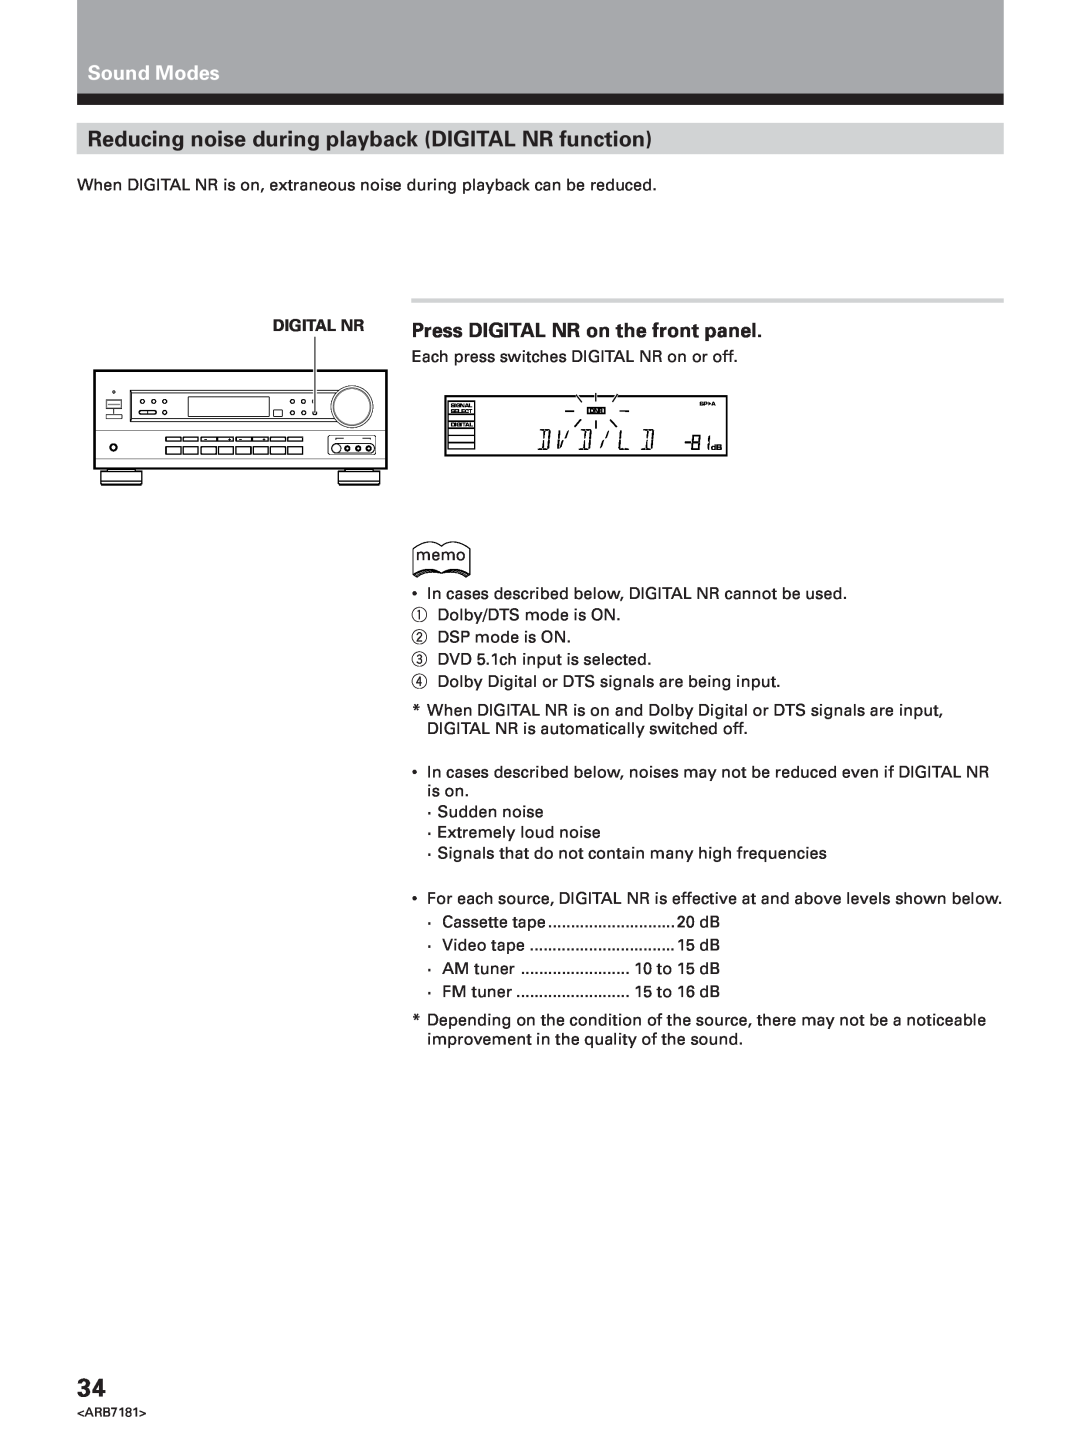 Pioneer VSX-21 manual Sound Modes, Press DIGITAL NR on the front panel, Digital Nr 